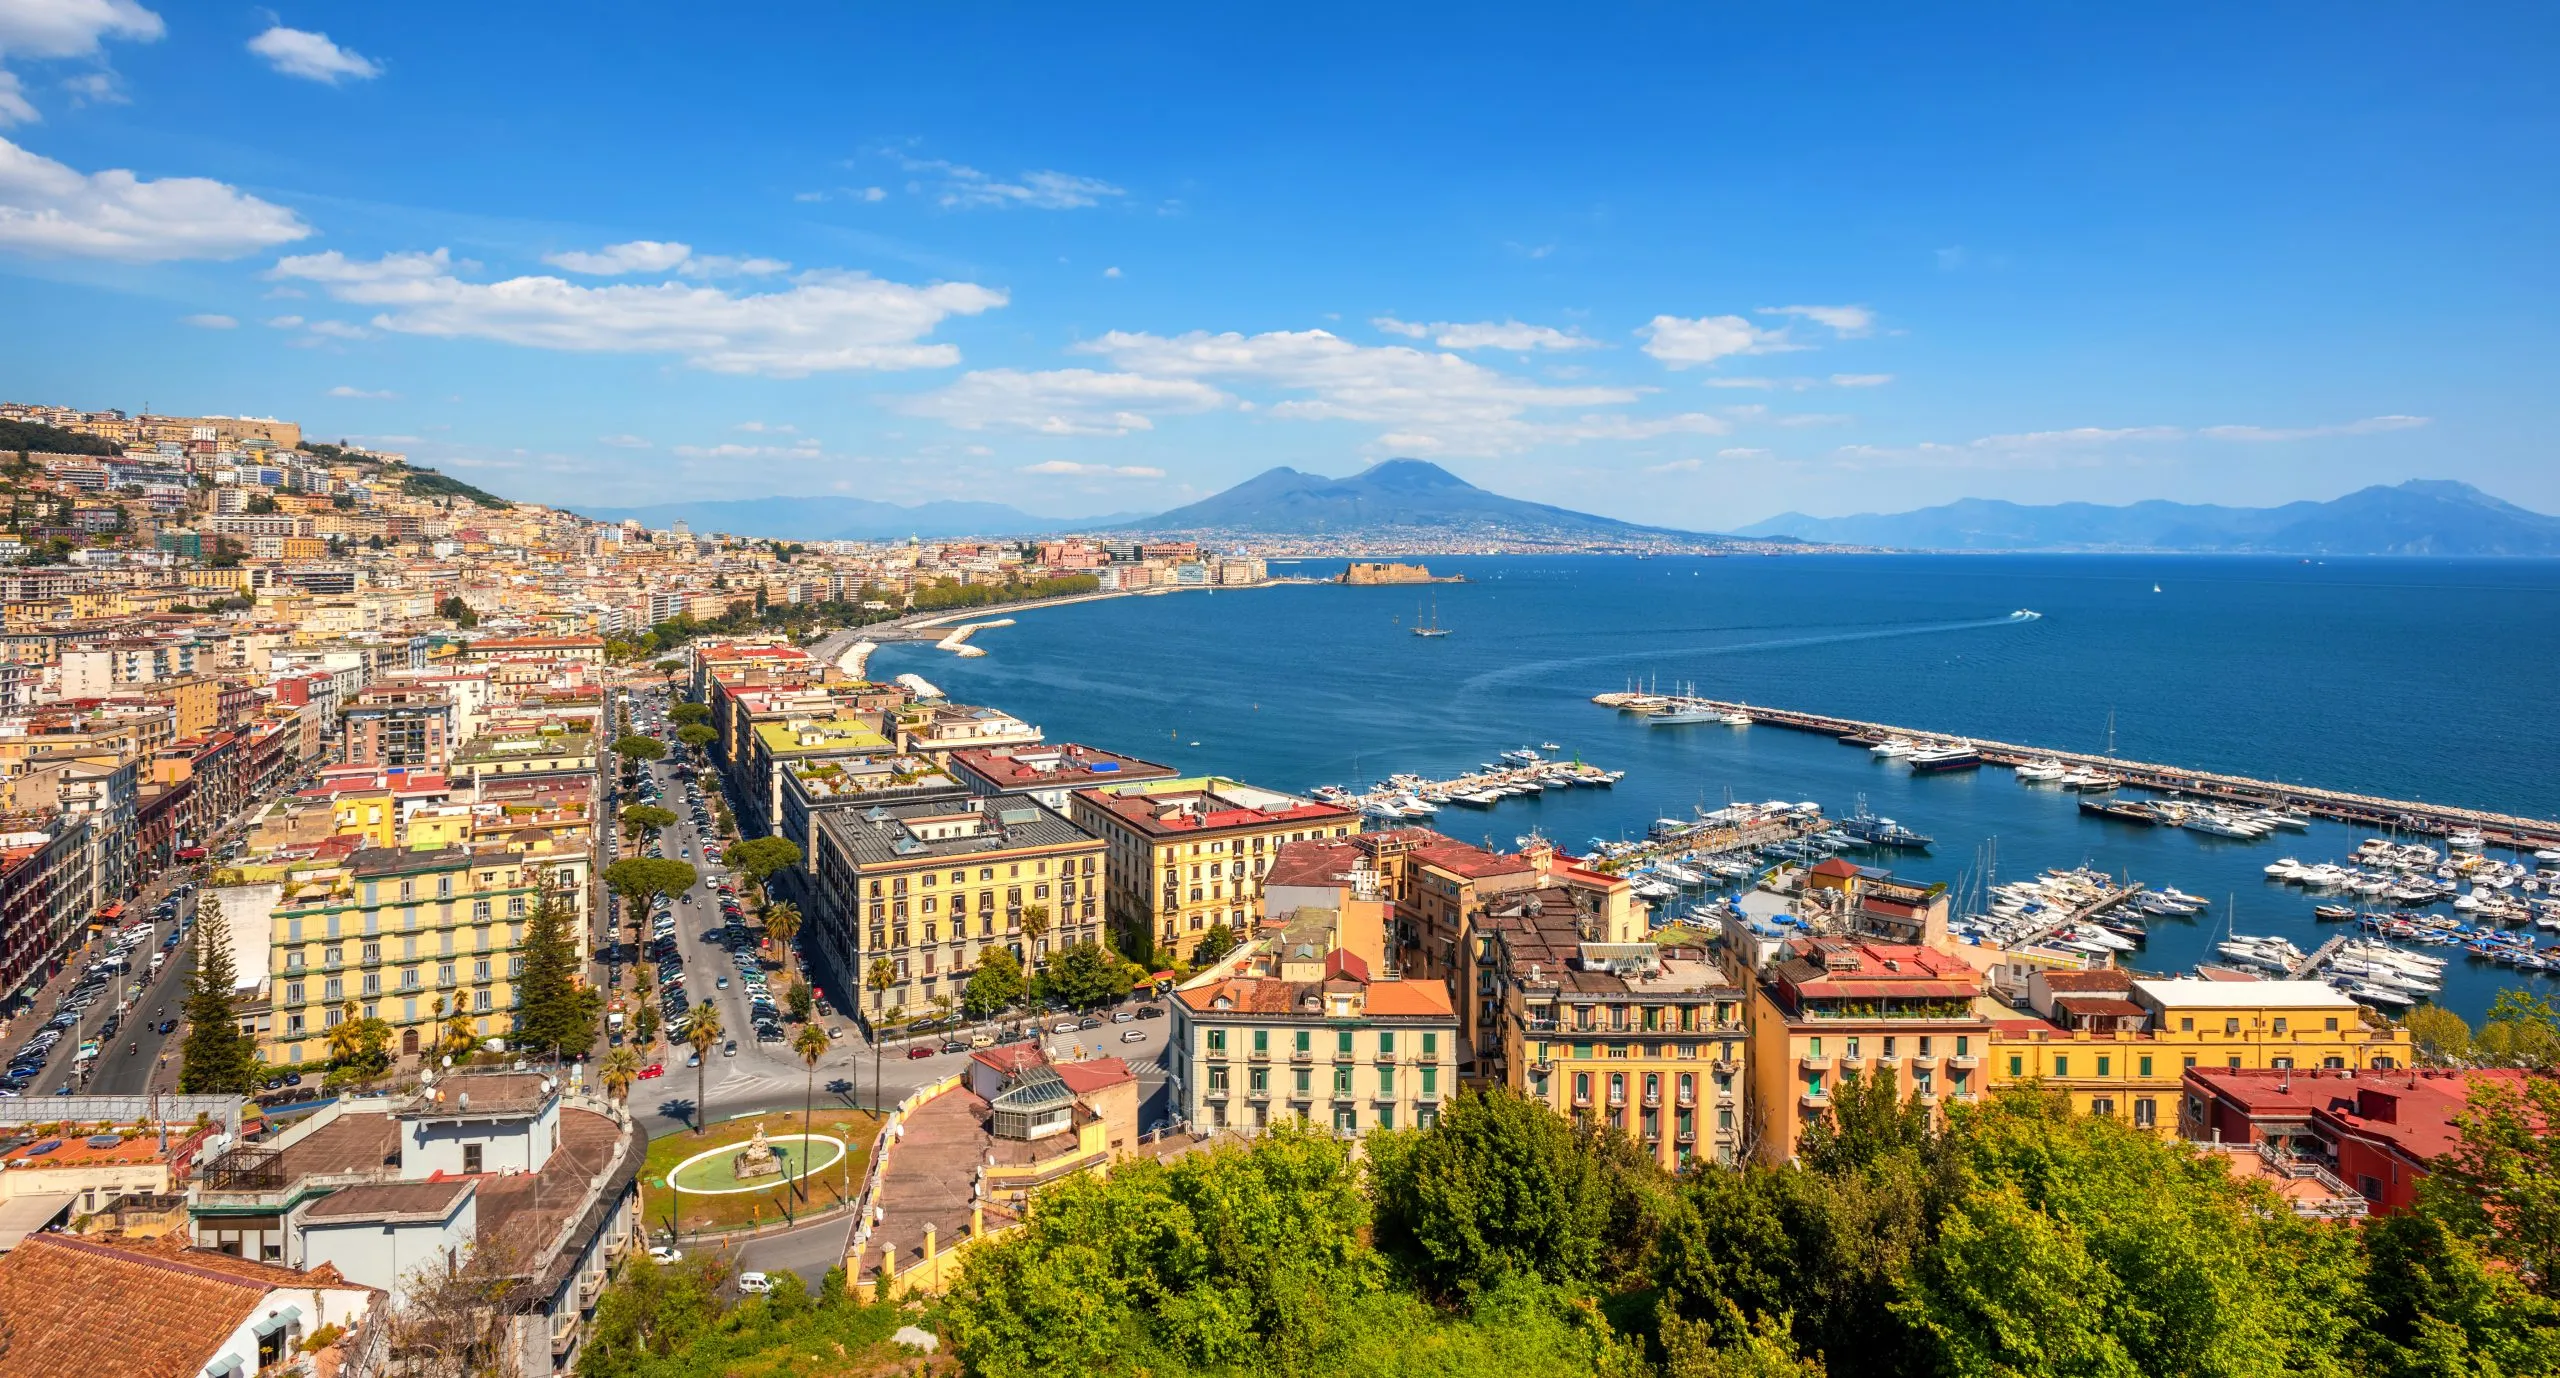 Panoramic view of Naples city, Chiaia neighborhood, Mount Vesuvius and gulf of Napoli, Mediterranean sea, Italy